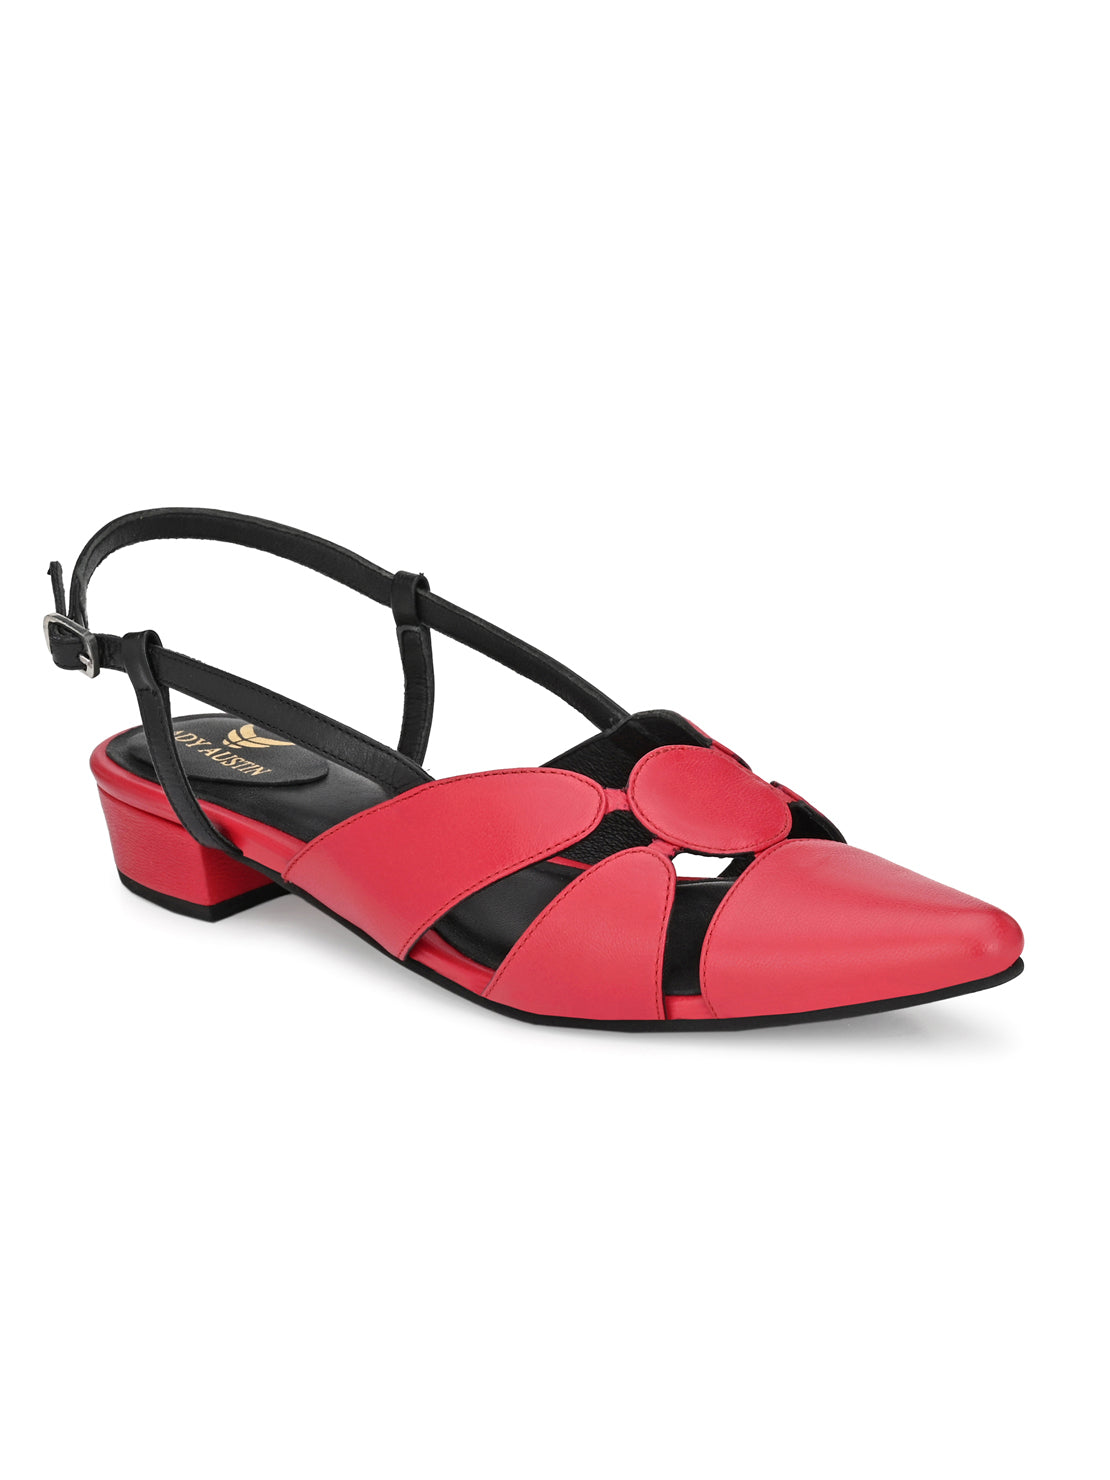 Aady Austin Women Red Pointed Toe Buckle Block Heels Sandals (AUSF19082)